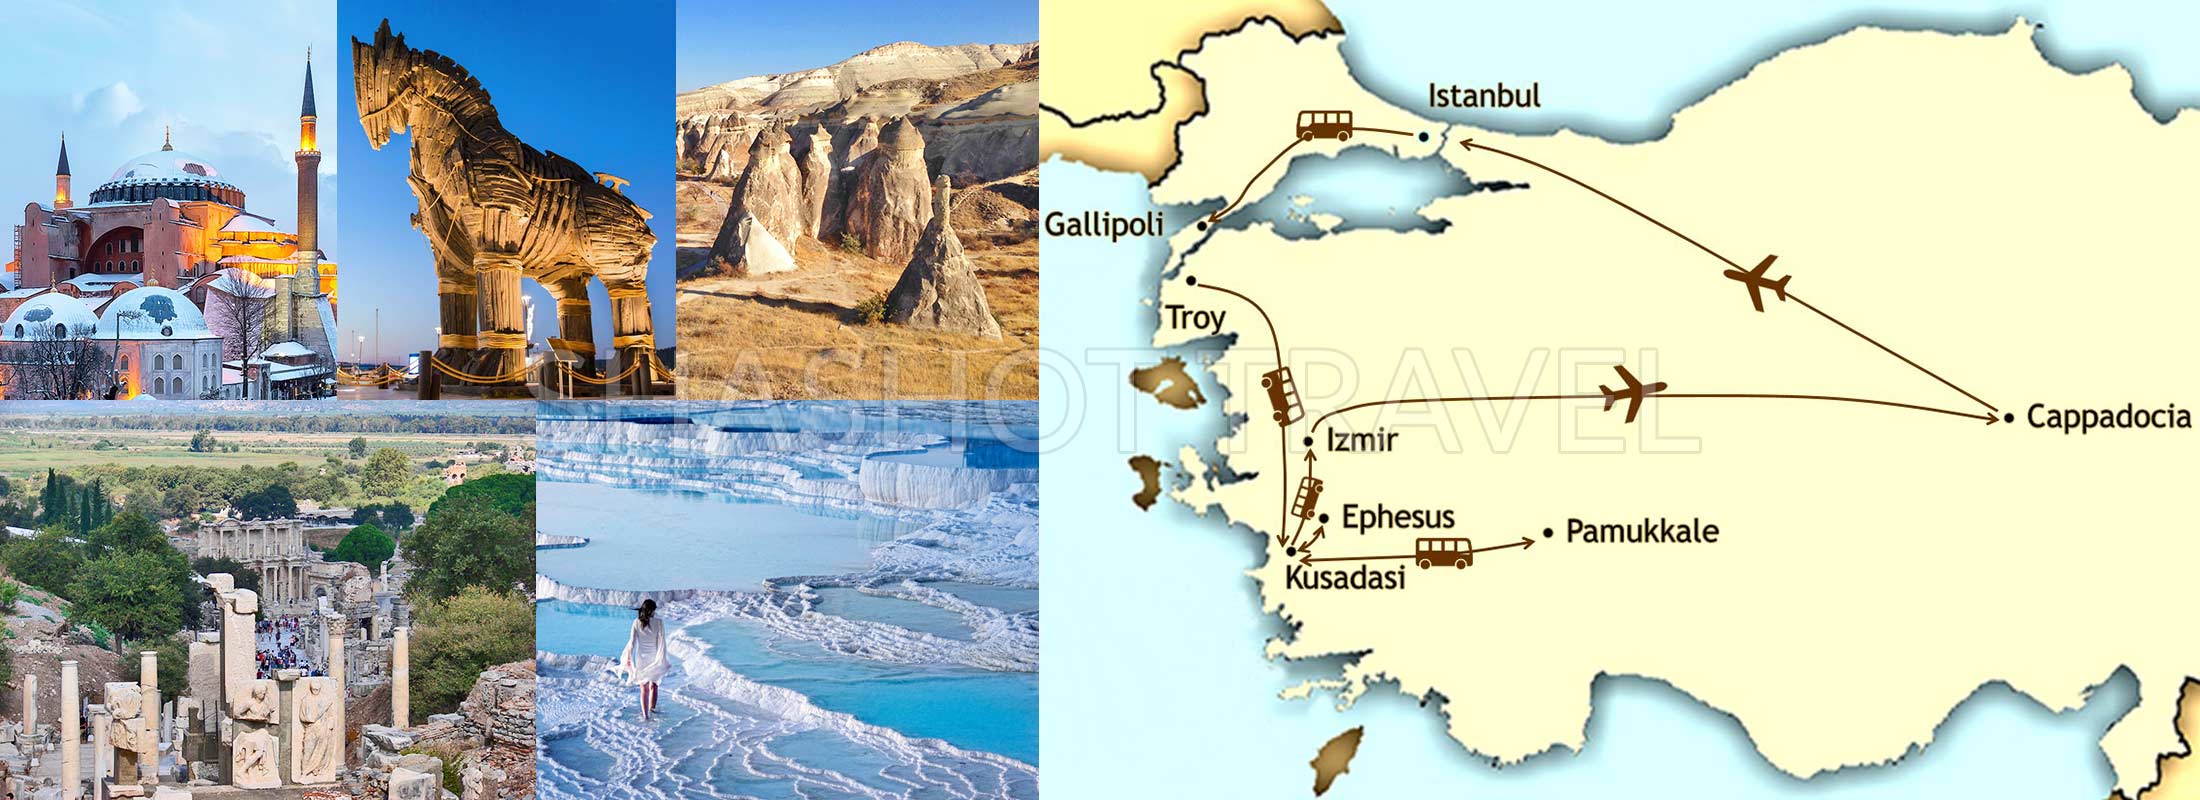 turkey-package-tours-9-days-istanbul-hagia-sophia-museum-blue-mosque-gallipoli-troy-ephesus-virgin-mary-house-pamukkale-cappadocia-flight